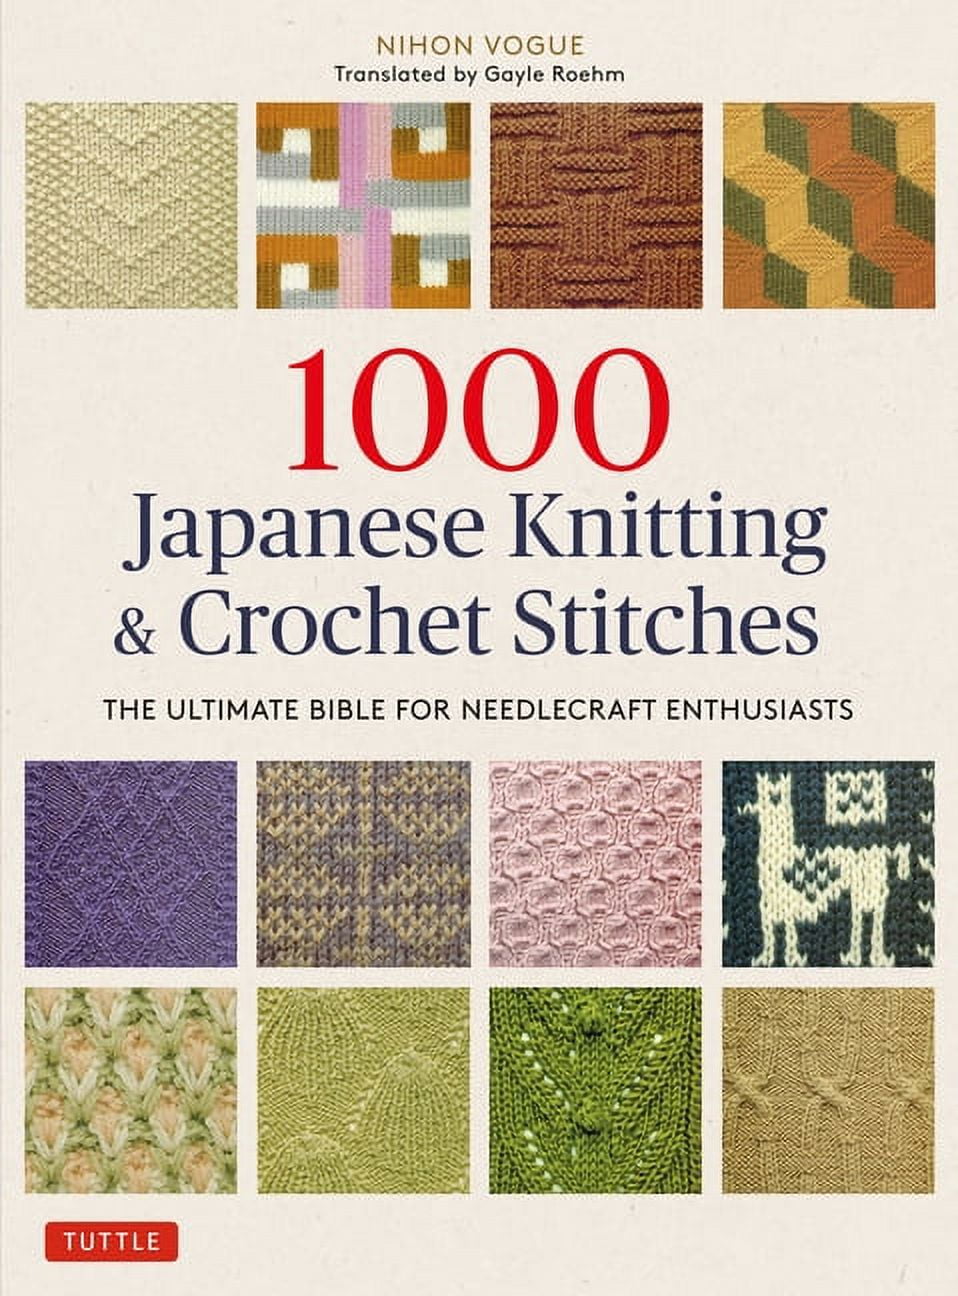 Ultimate Crochet Pattern Book: 4 Manuscripts In 1 Book For The Ultimate  Crochet Patterns Book With Over 125 Crochet Patterns Included (Crocheting)